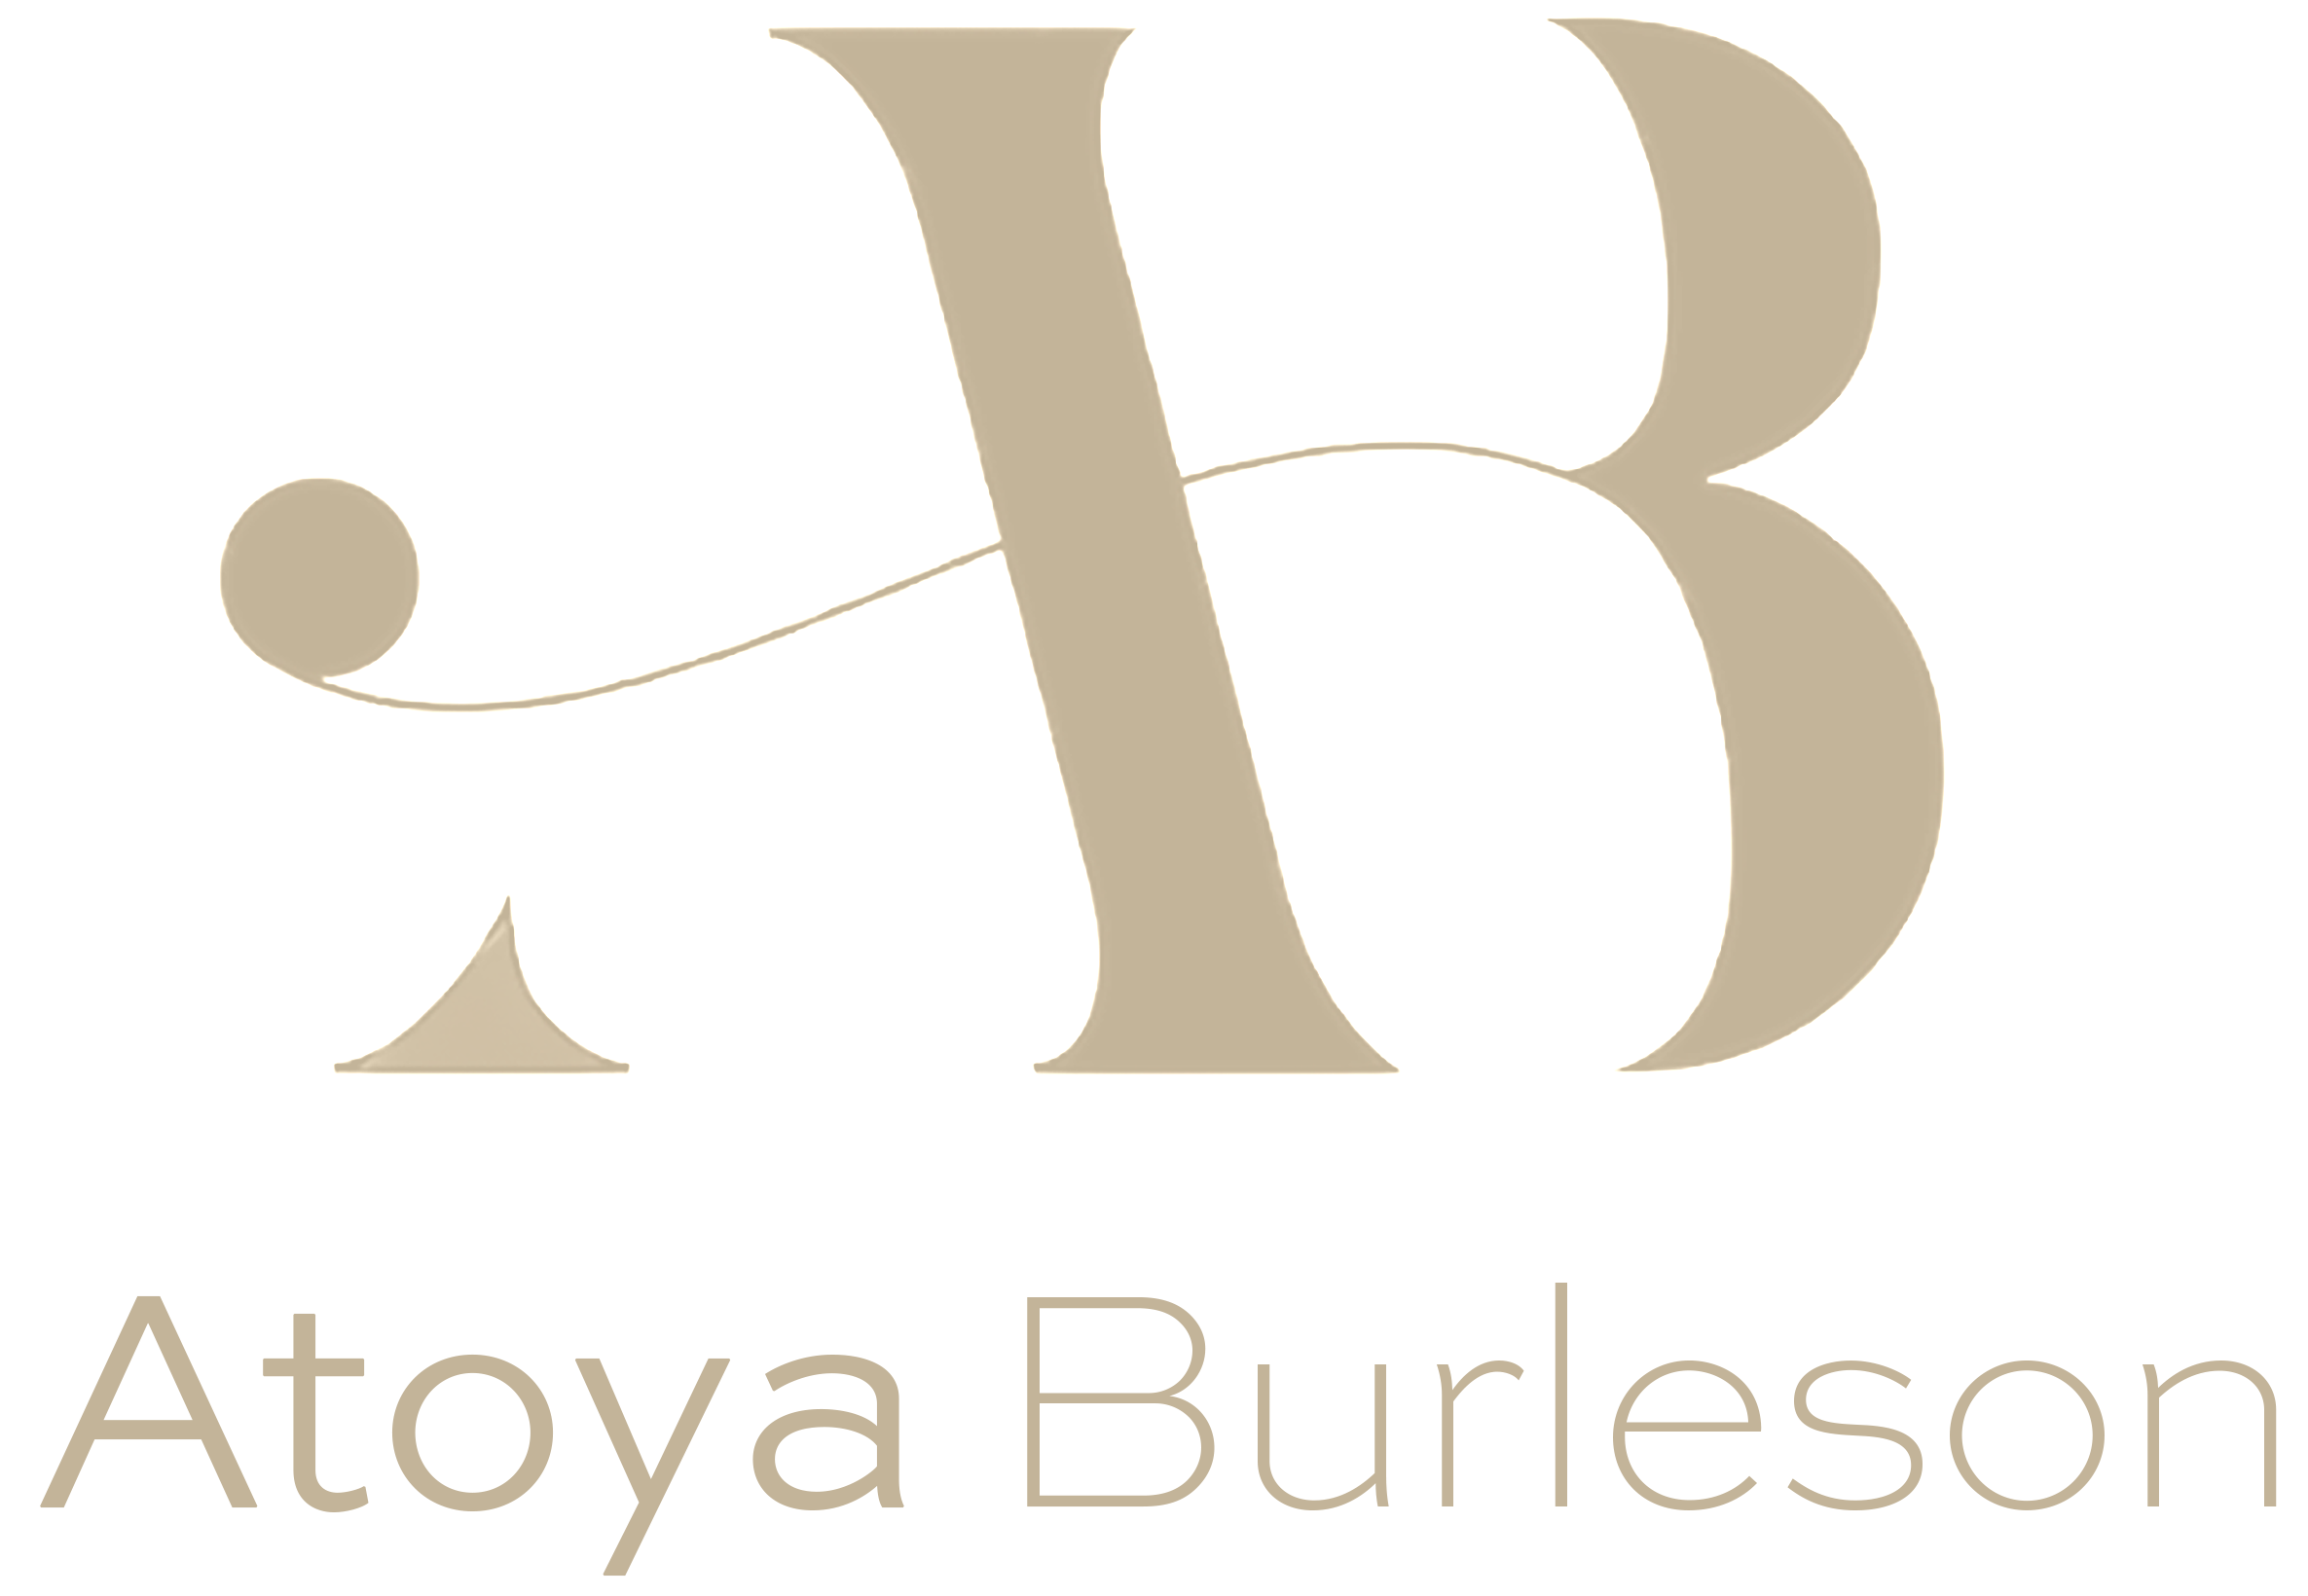 Atoya Burleson